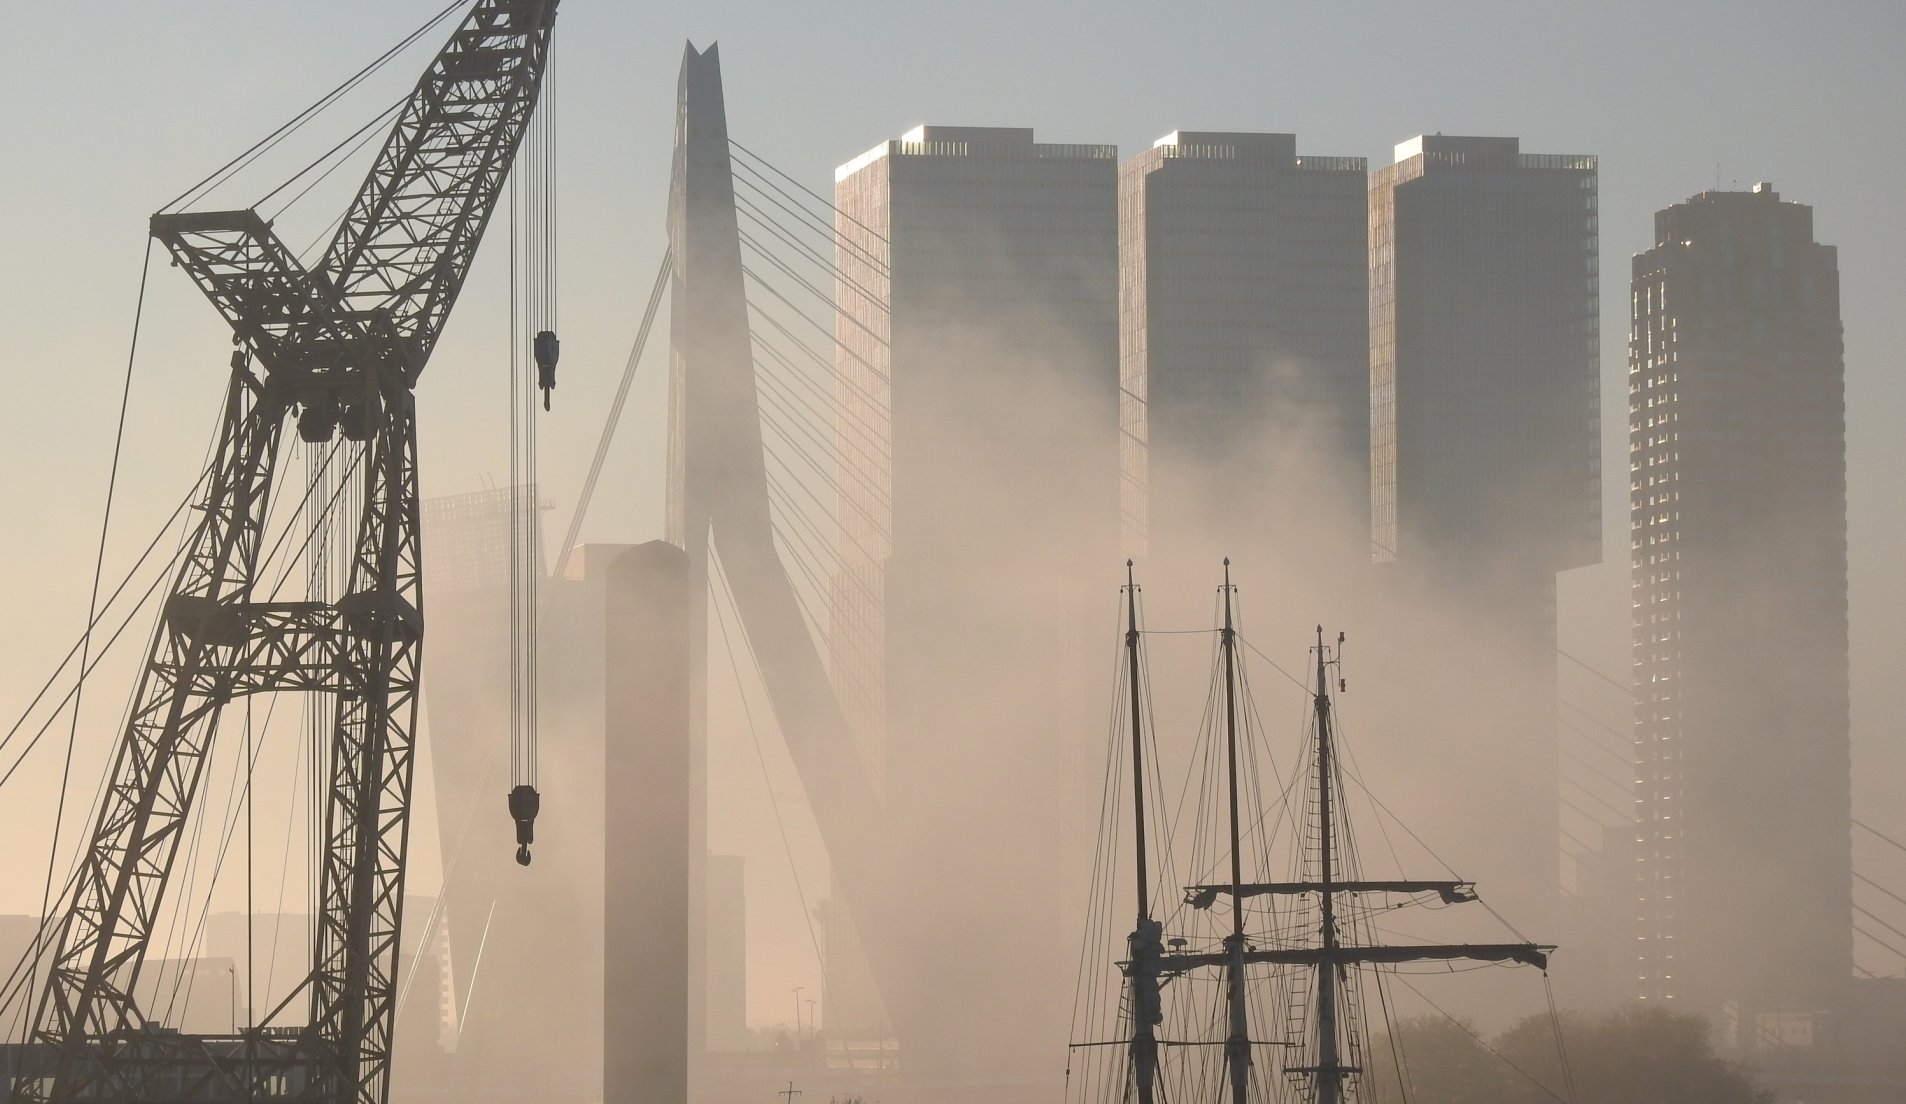 Simson, Erasmusbrug en De Rotterdam in de mist